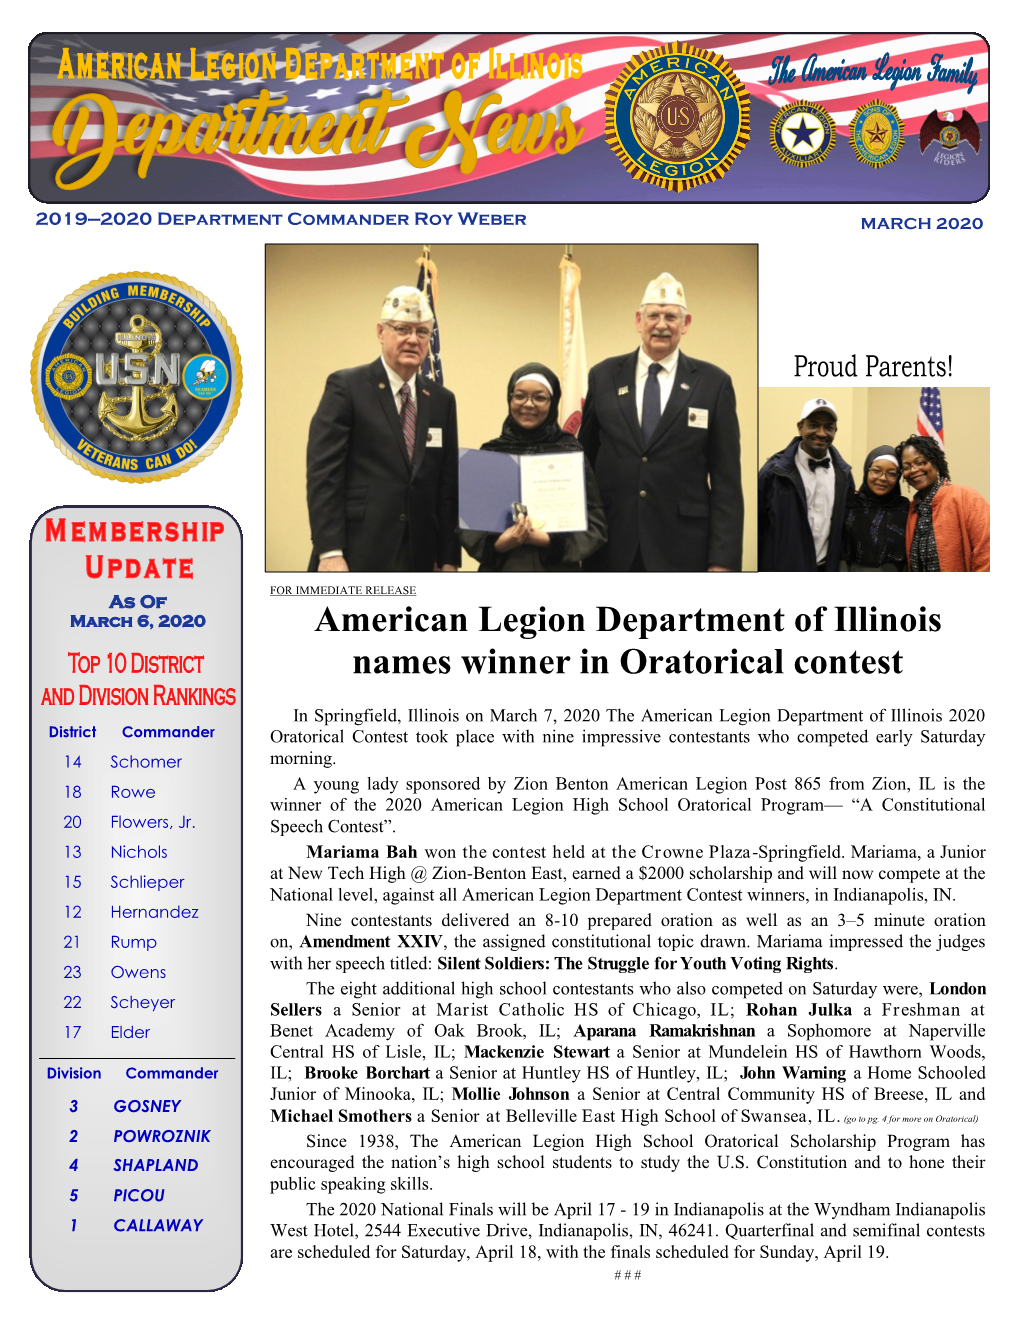 American Legion Department of Illinois Names Winner in Oratorical Contest